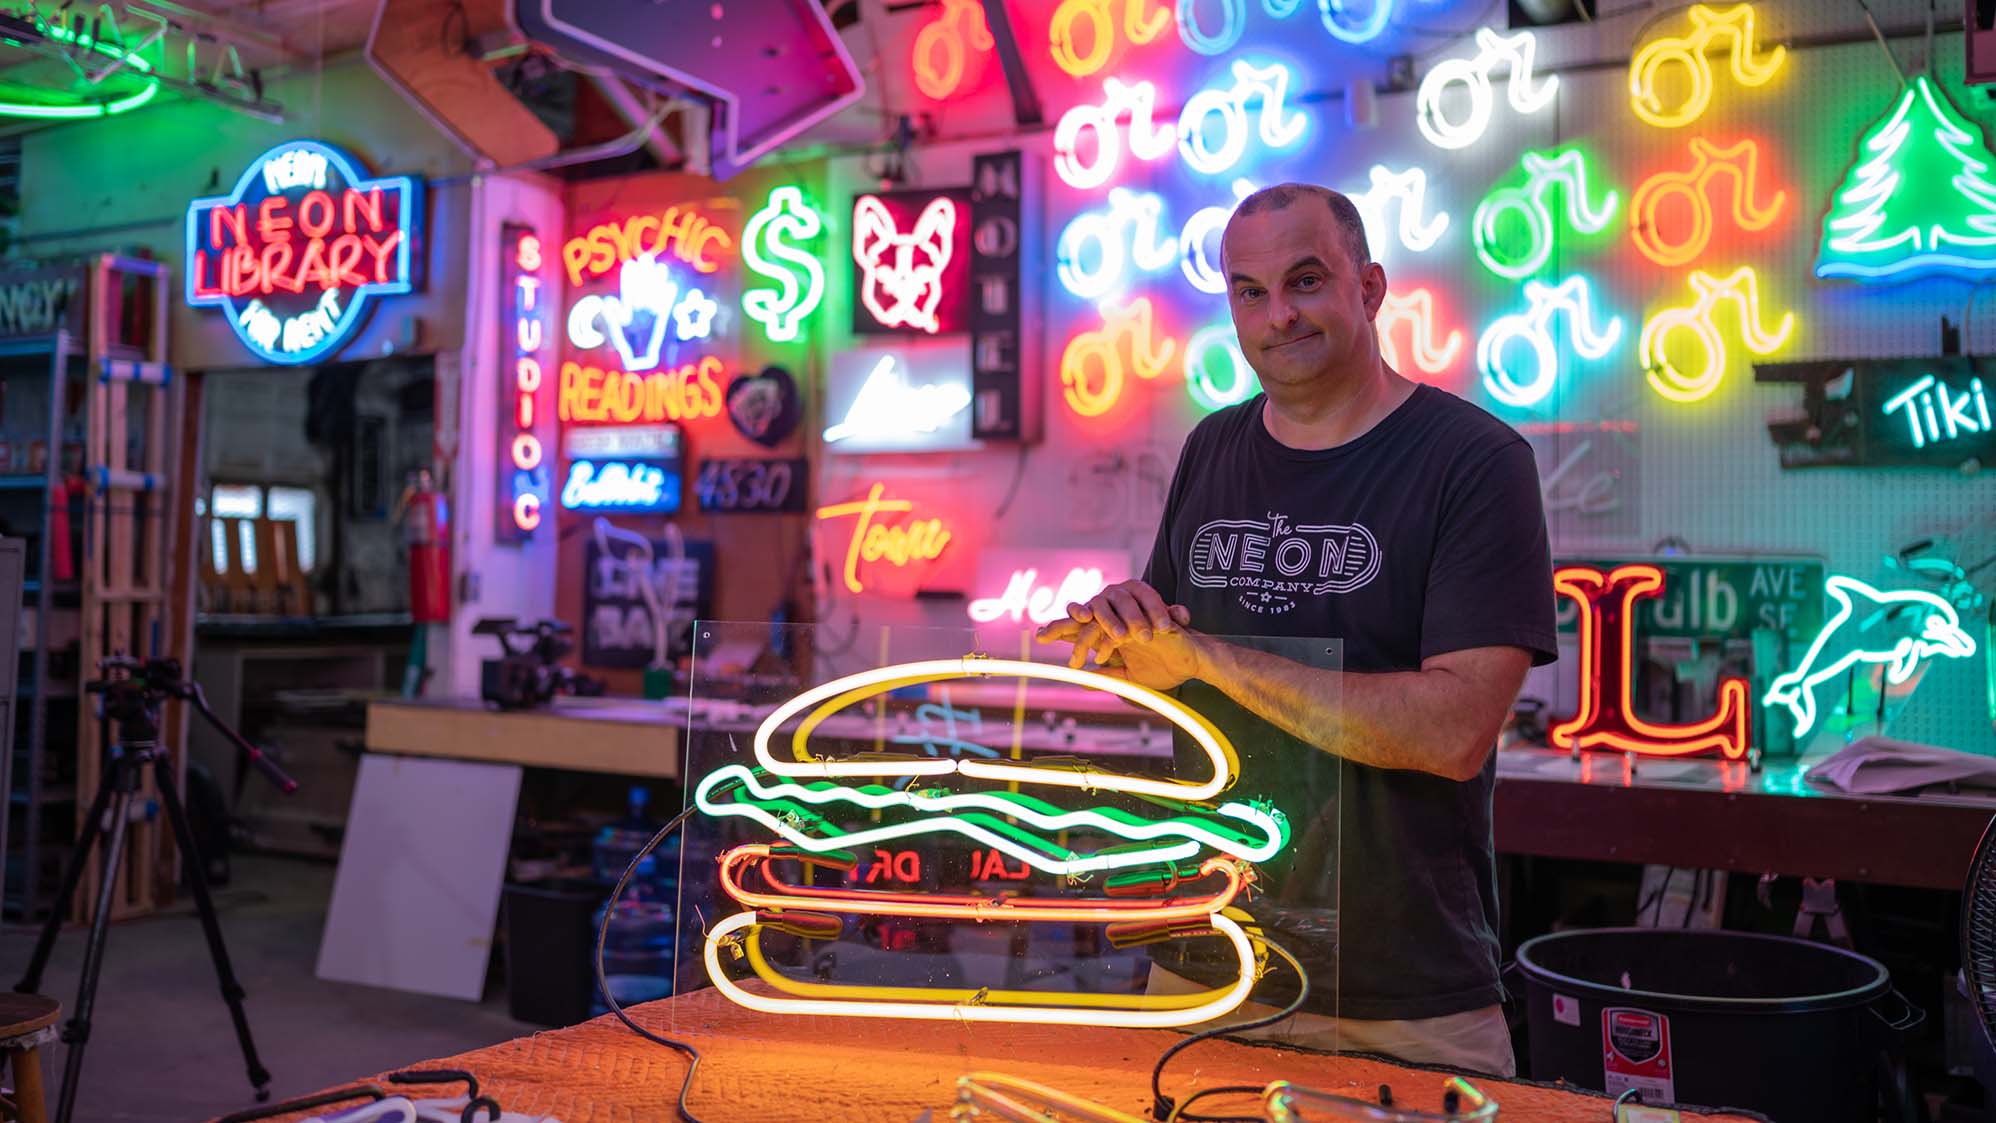 Man with neon sign of a hamburger